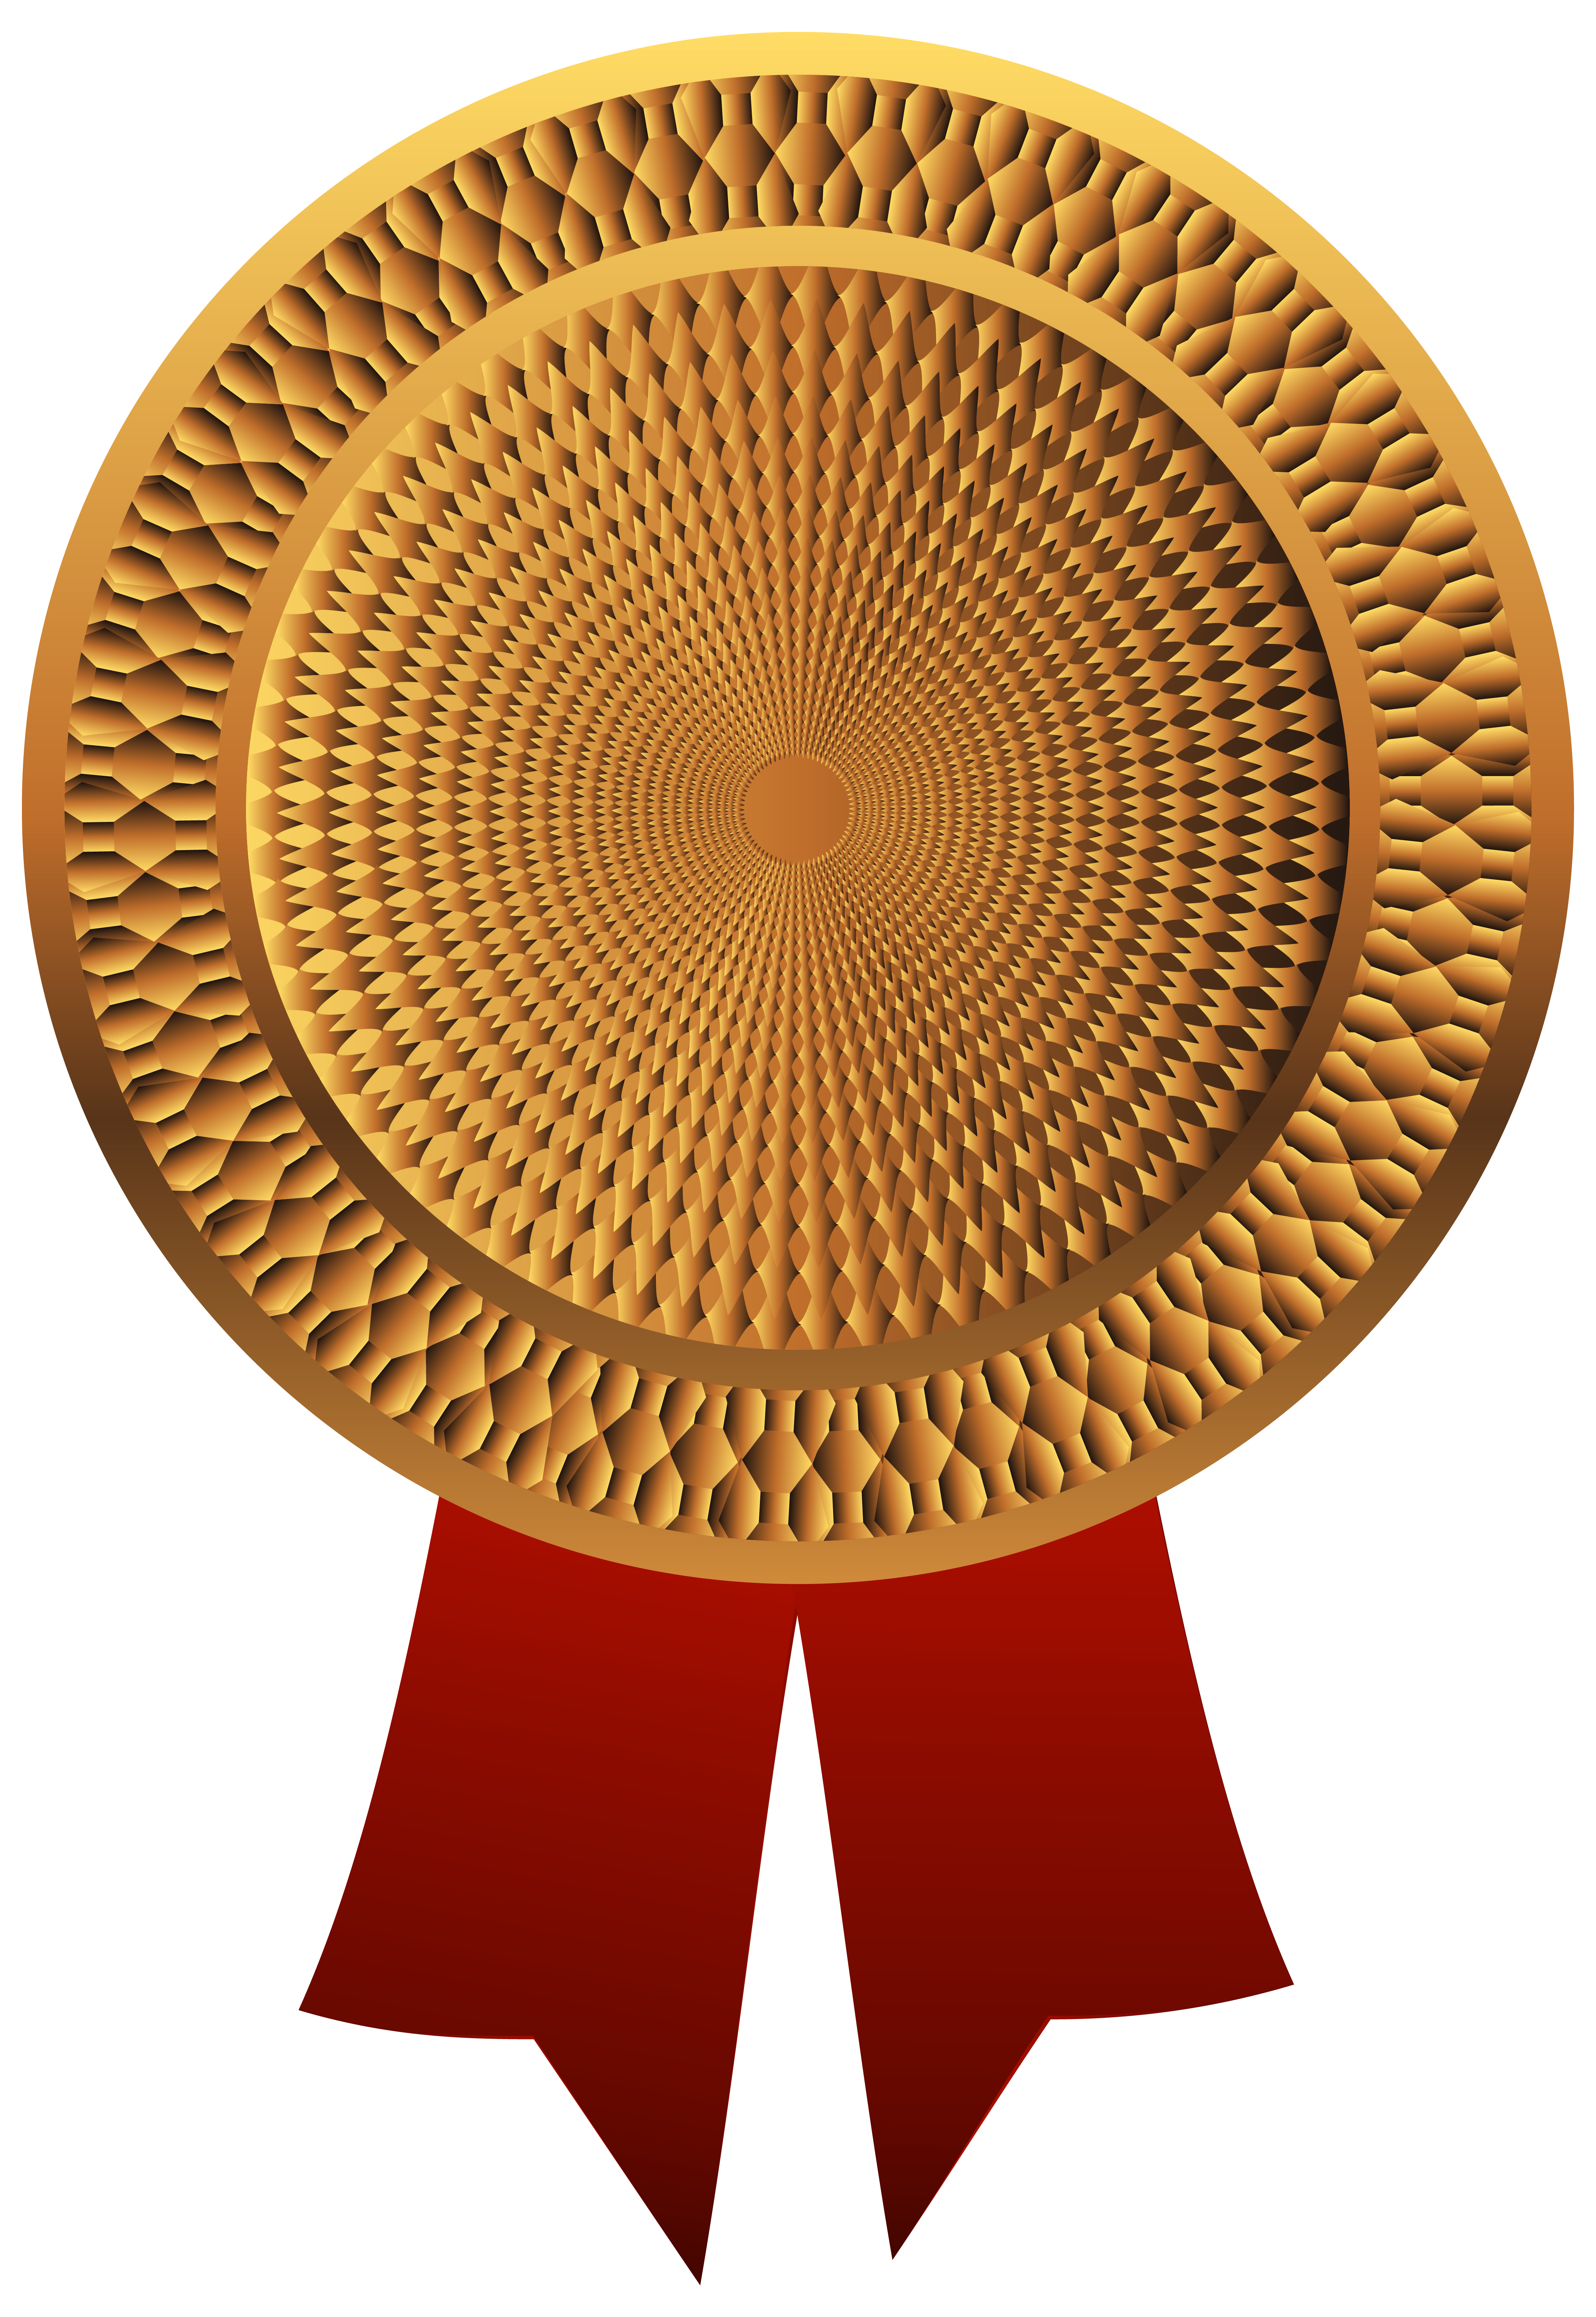 Medal PNG